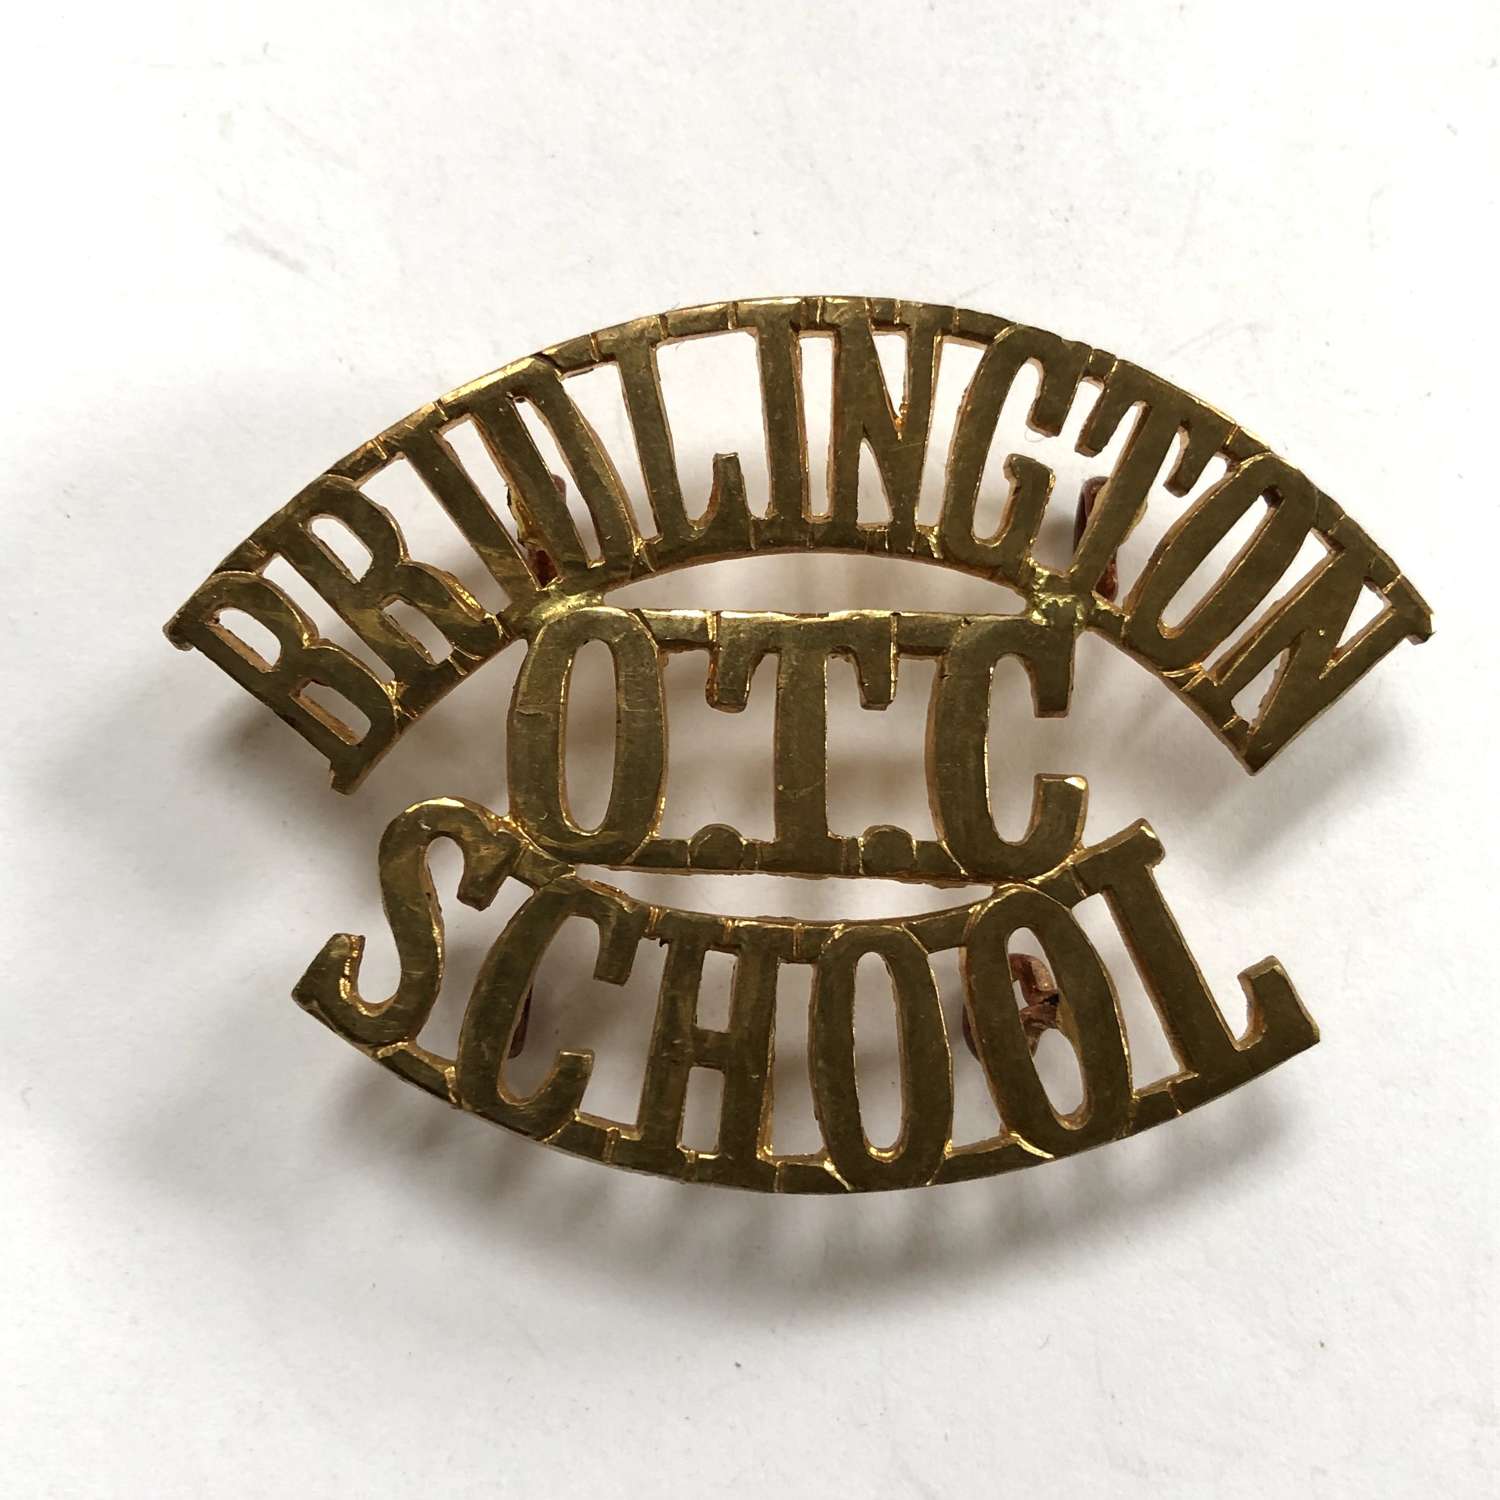 BRIDLINGTON  / OTC  / SCHOOL Yorkshire shoulder title